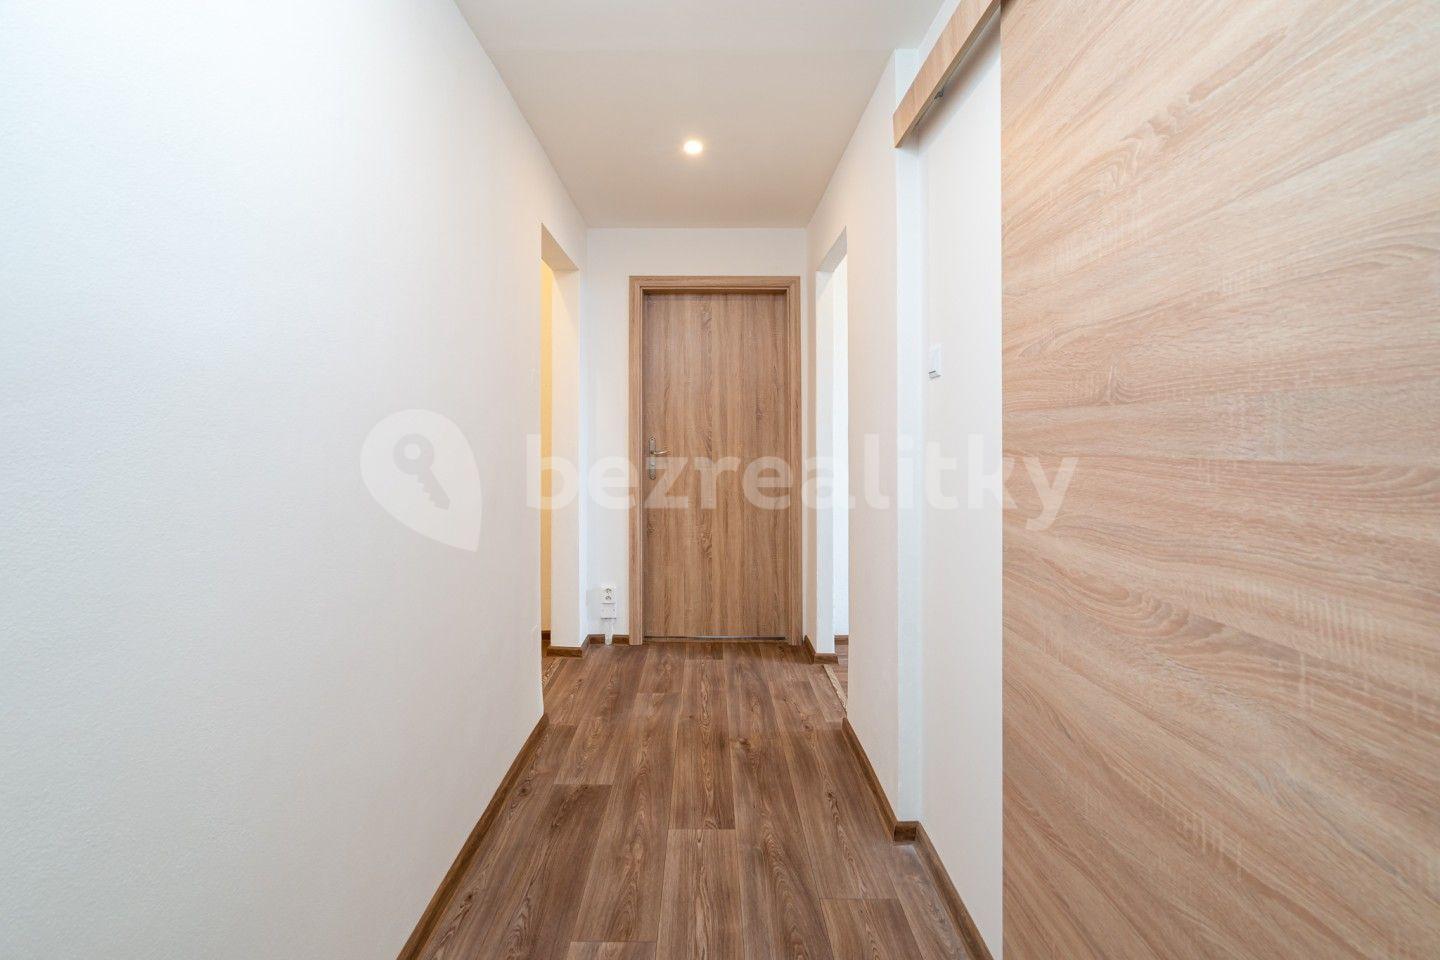 Predaj bytu 3-izbový 77 m², gen. Svobody, Moravský Beroun, Olomoucký kraj